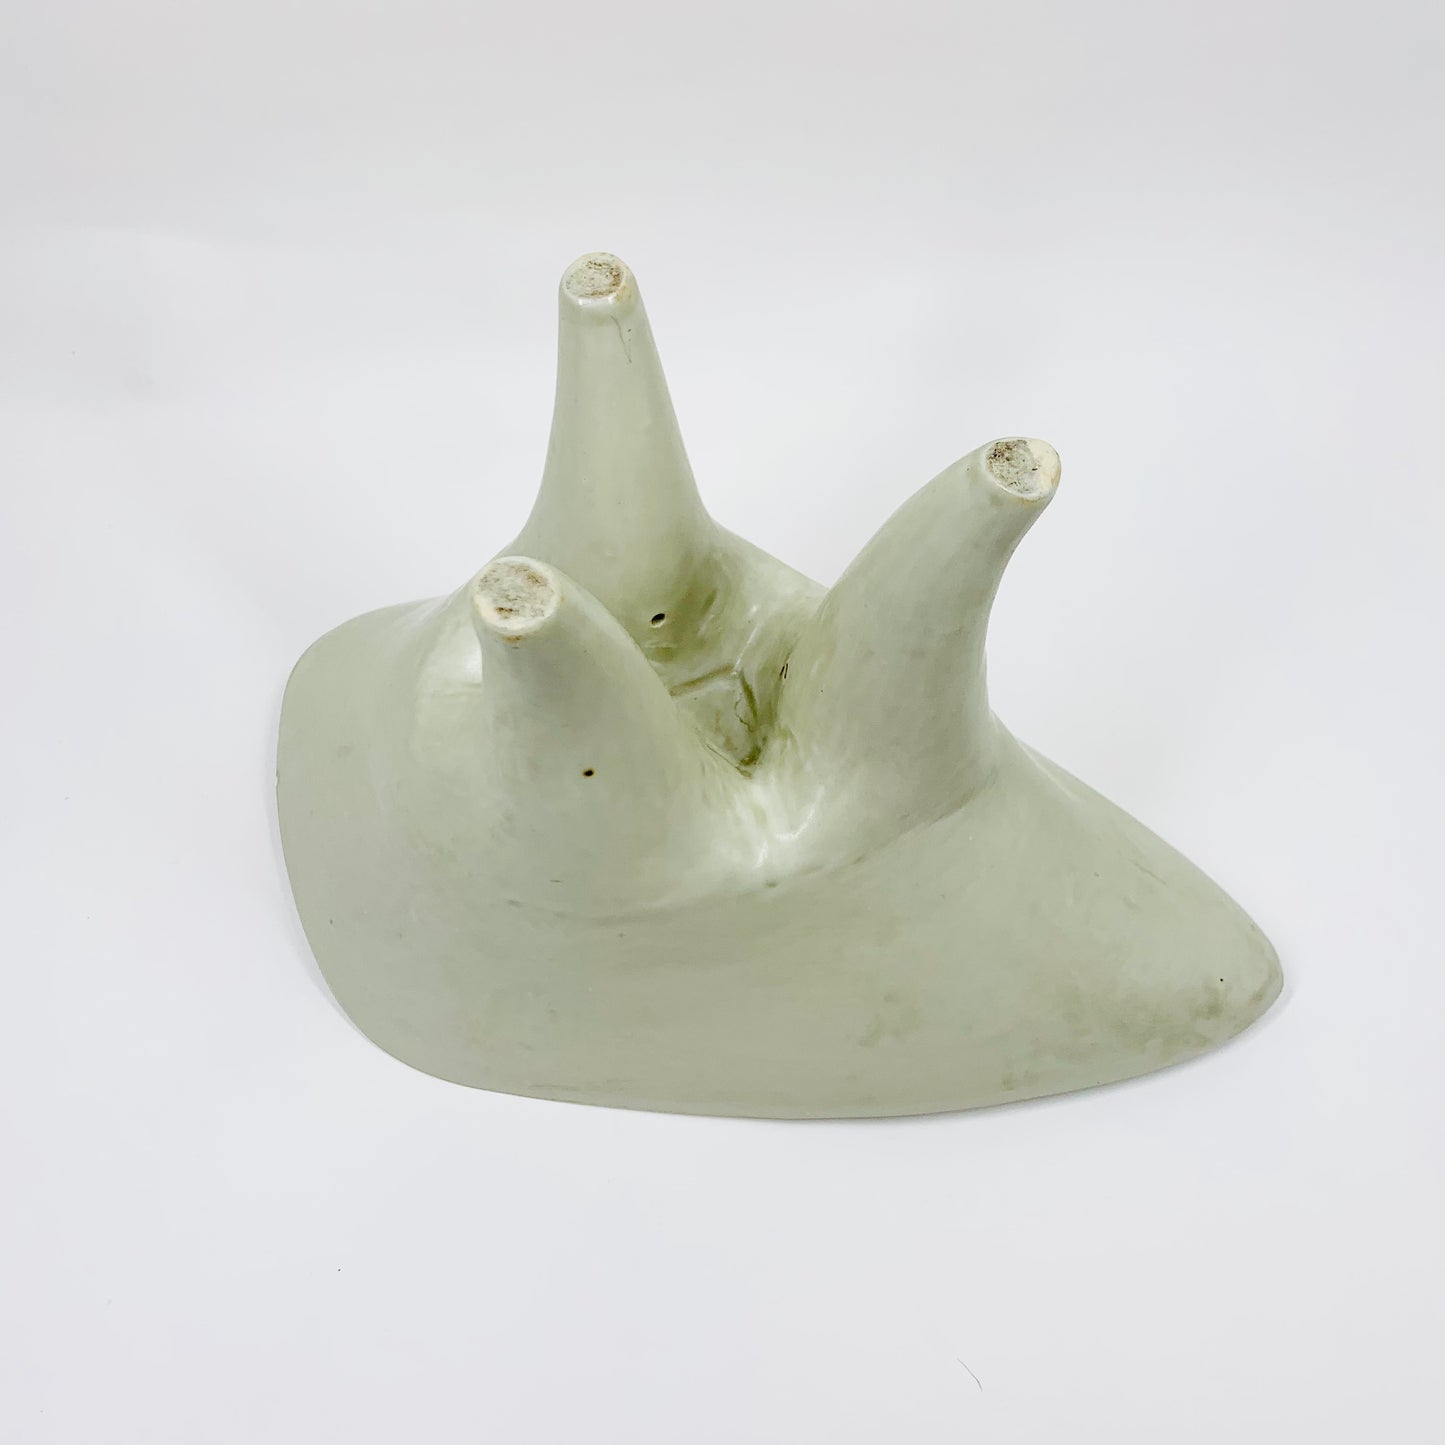 Extremely rare hand made Midcentury modernist Japanese pottery ikebana vessel